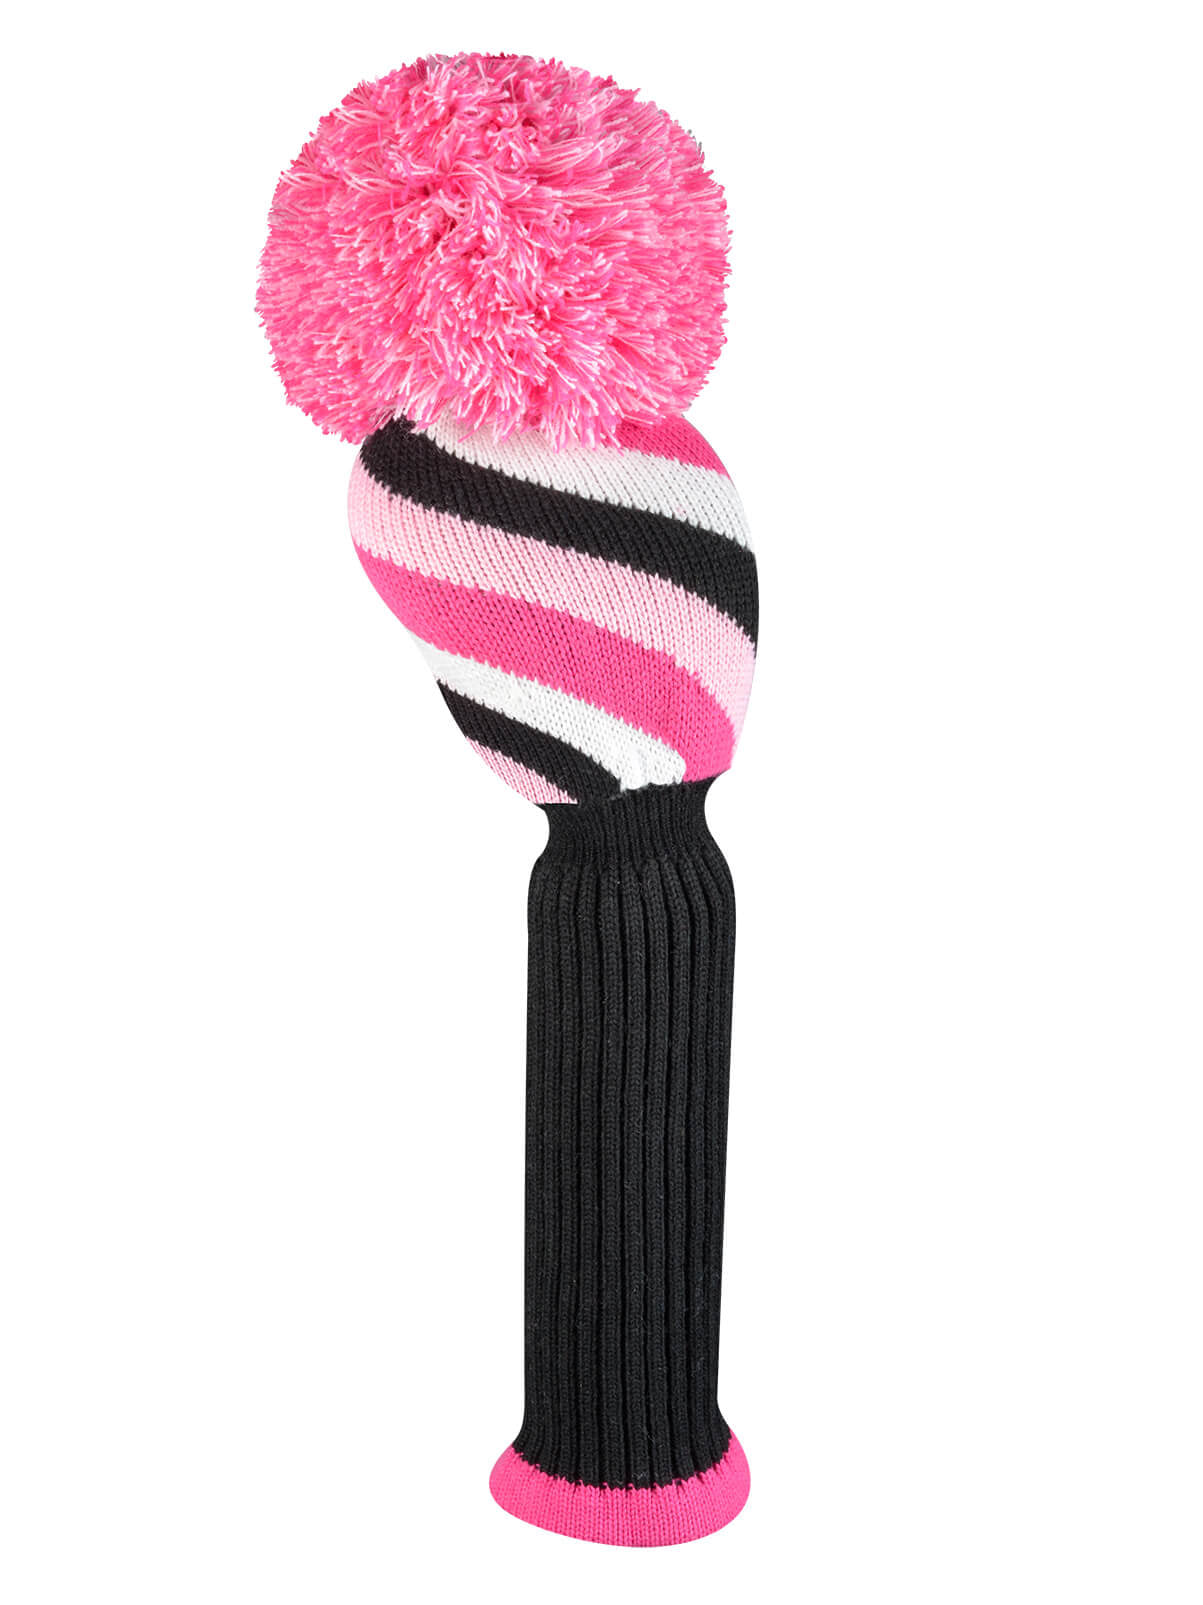 Diagonal Stripe Driver Headcover - Pink, Black, & White